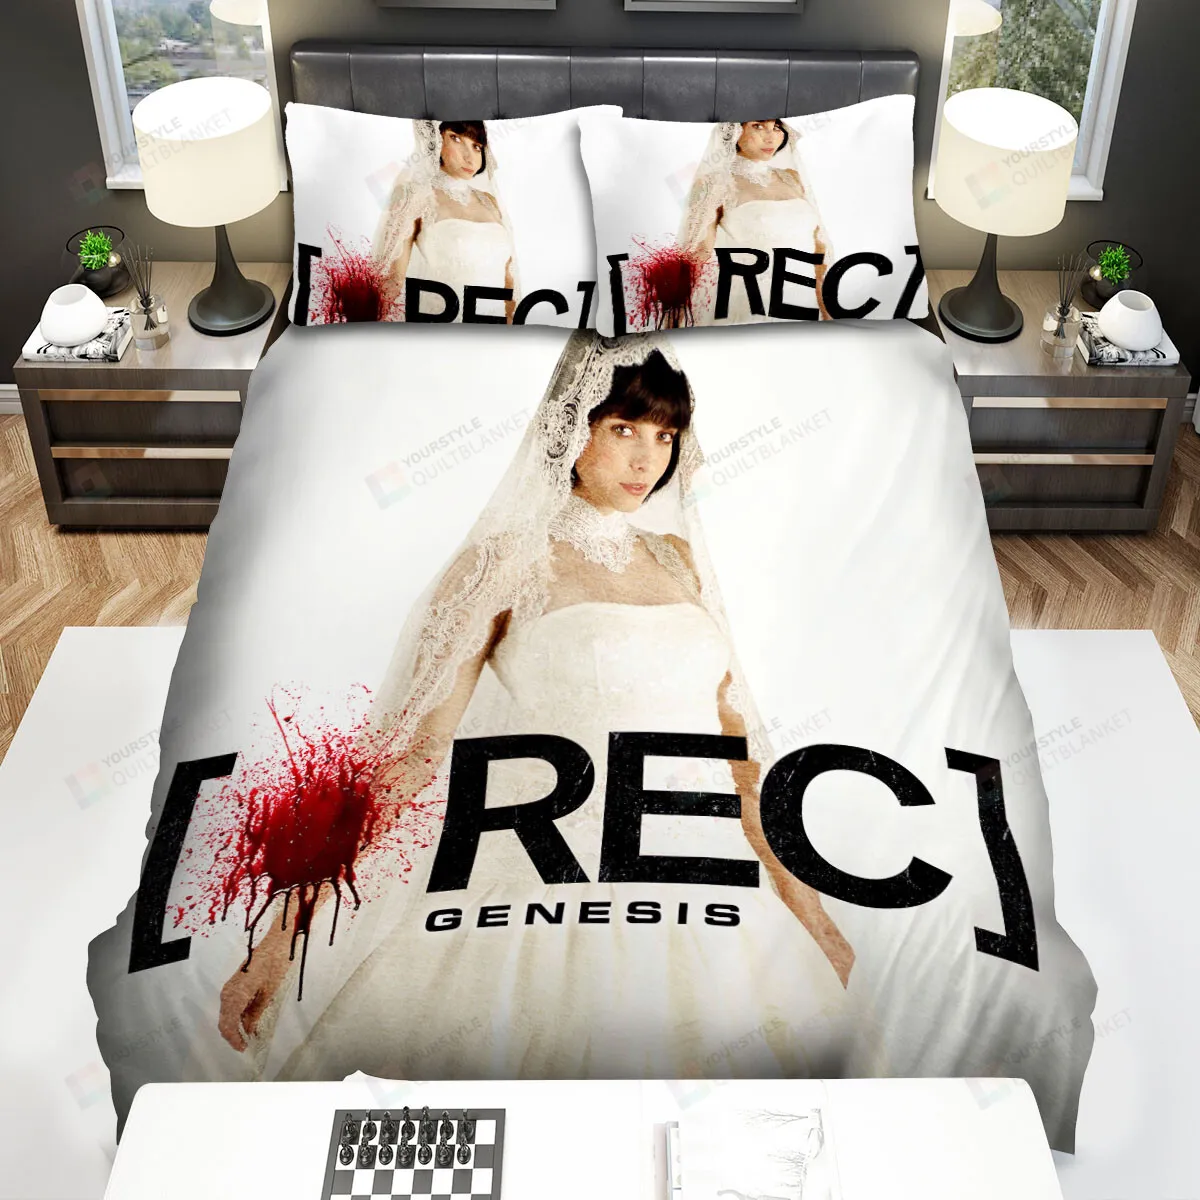 Rec 3 Genesis (2012) Bride Bed Sheets Spread Comforter Duvet Cover Bedding Sets